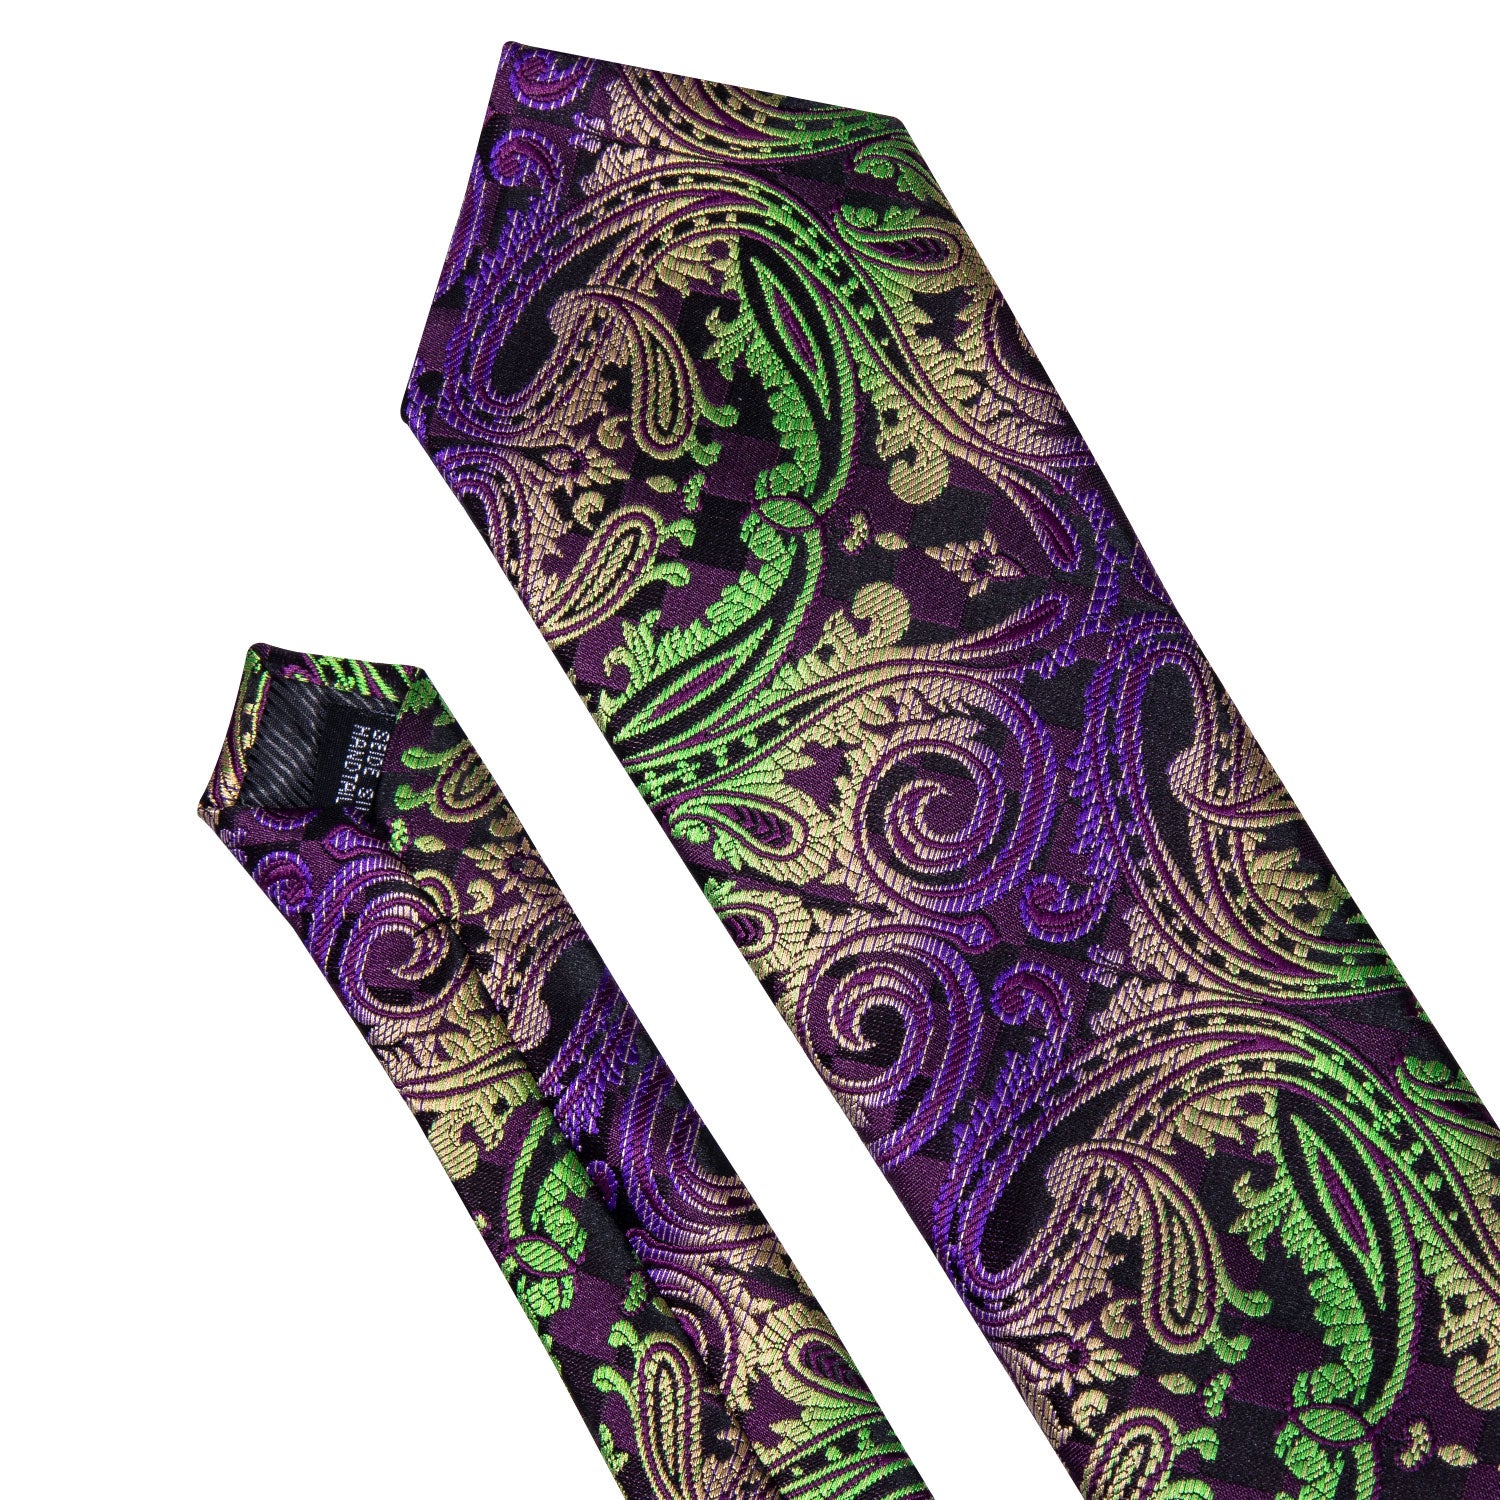 Colorful Men's Jacquard Paisley Tie Pocket Square Cufflinks Set